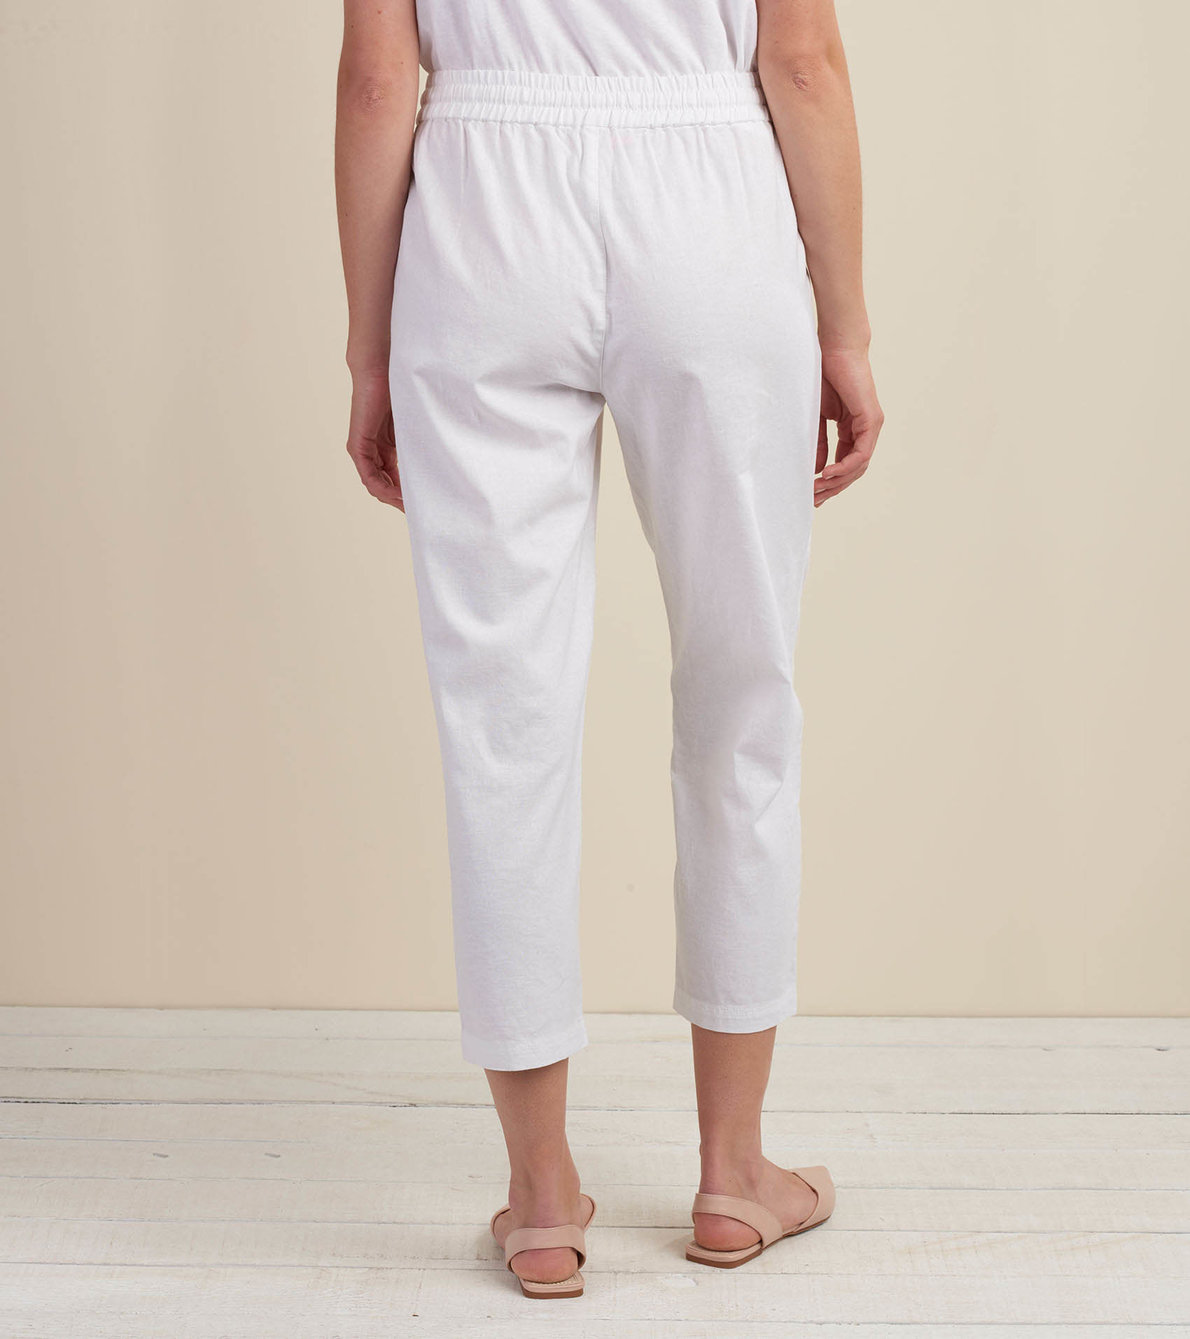 View larger image of Sierra Cotton Linen Pants - White